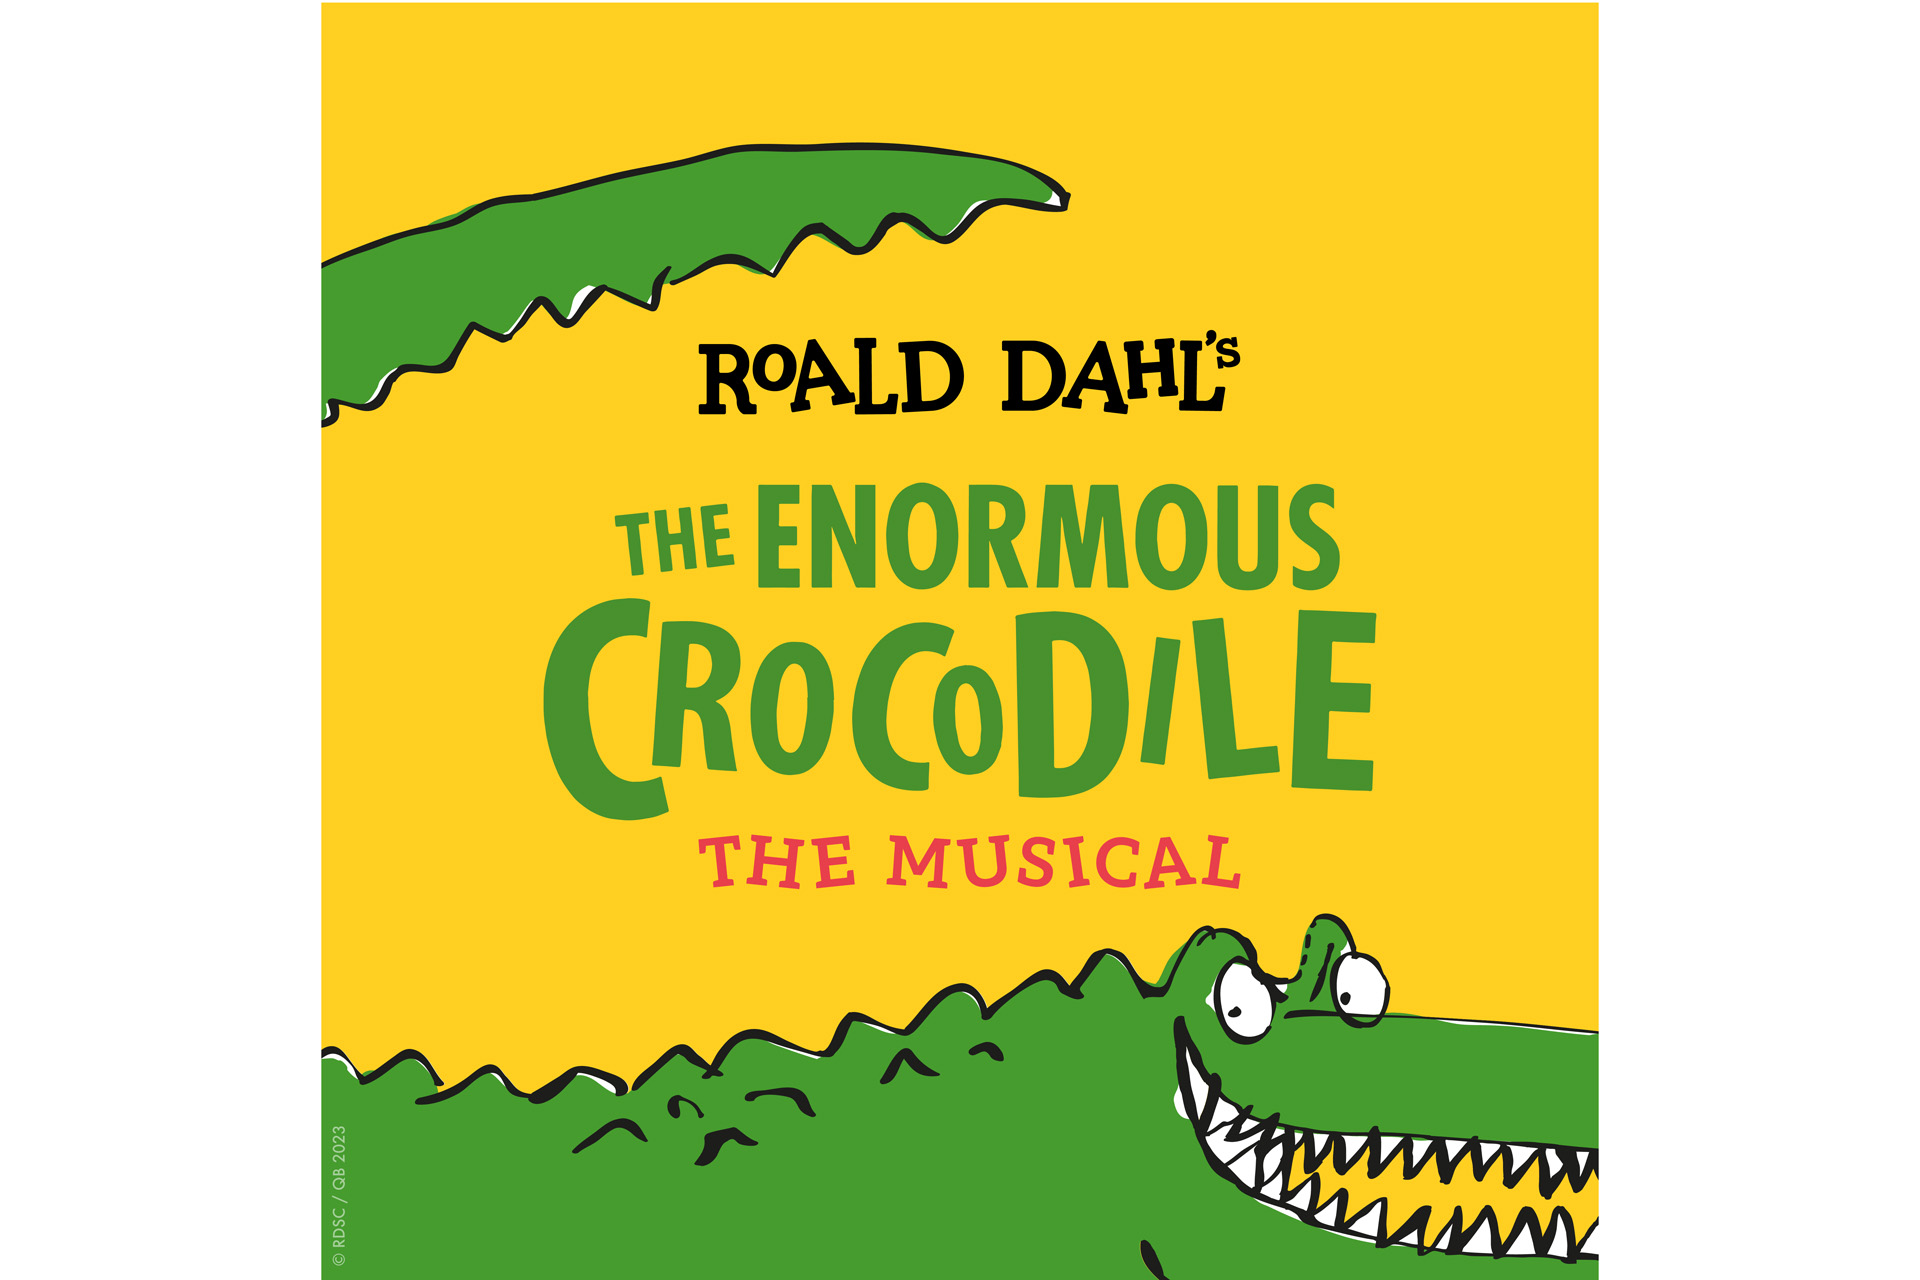 The Enormous Crocodile Musical